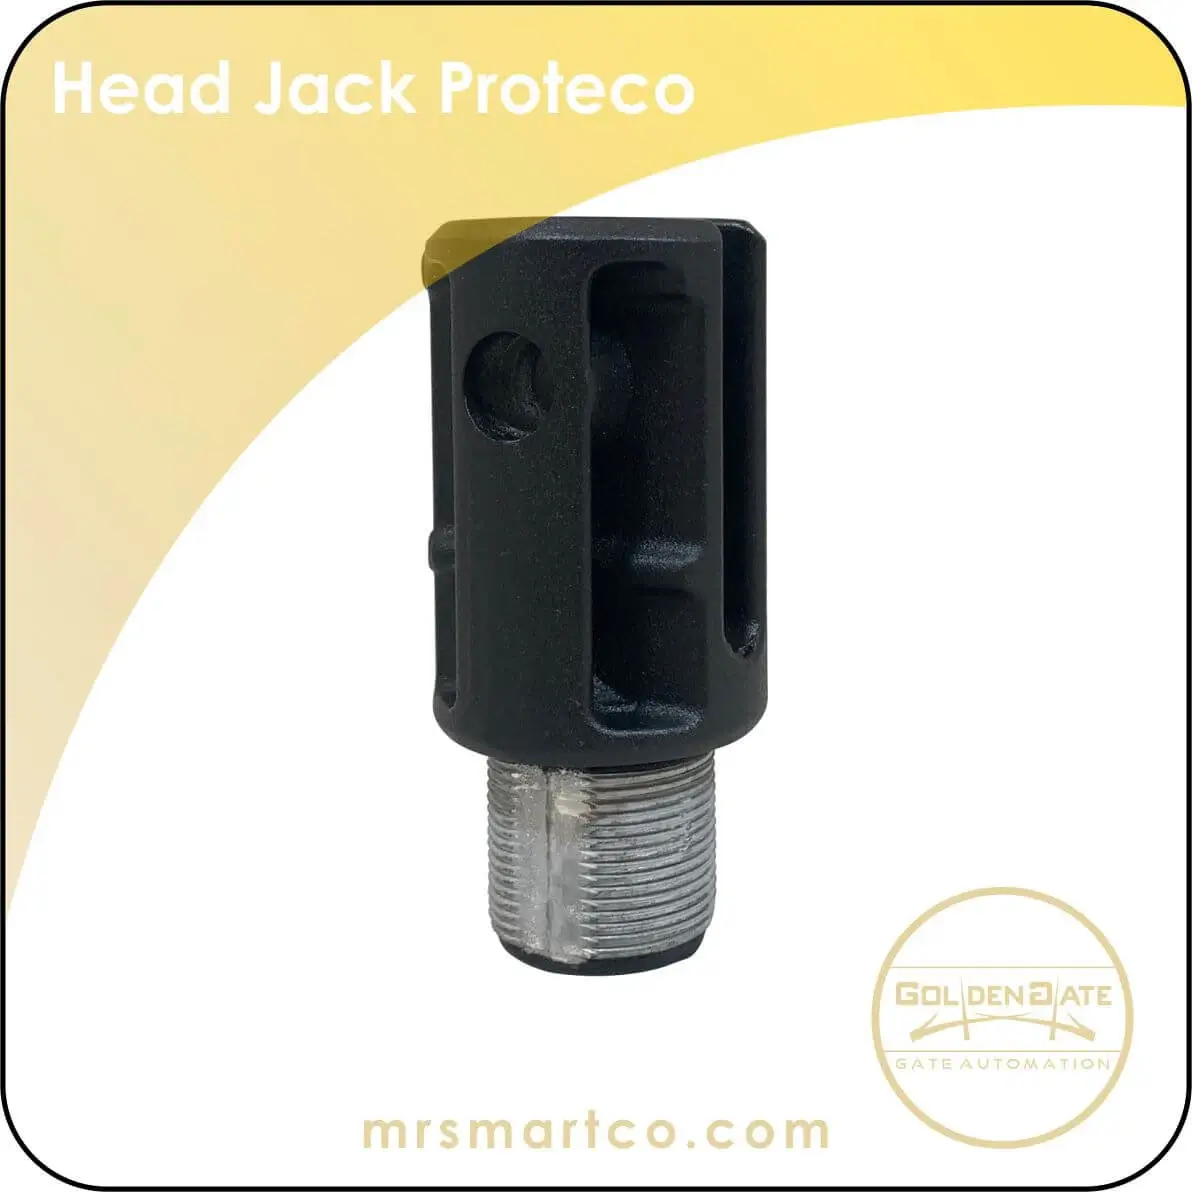 Head Jack Proteco